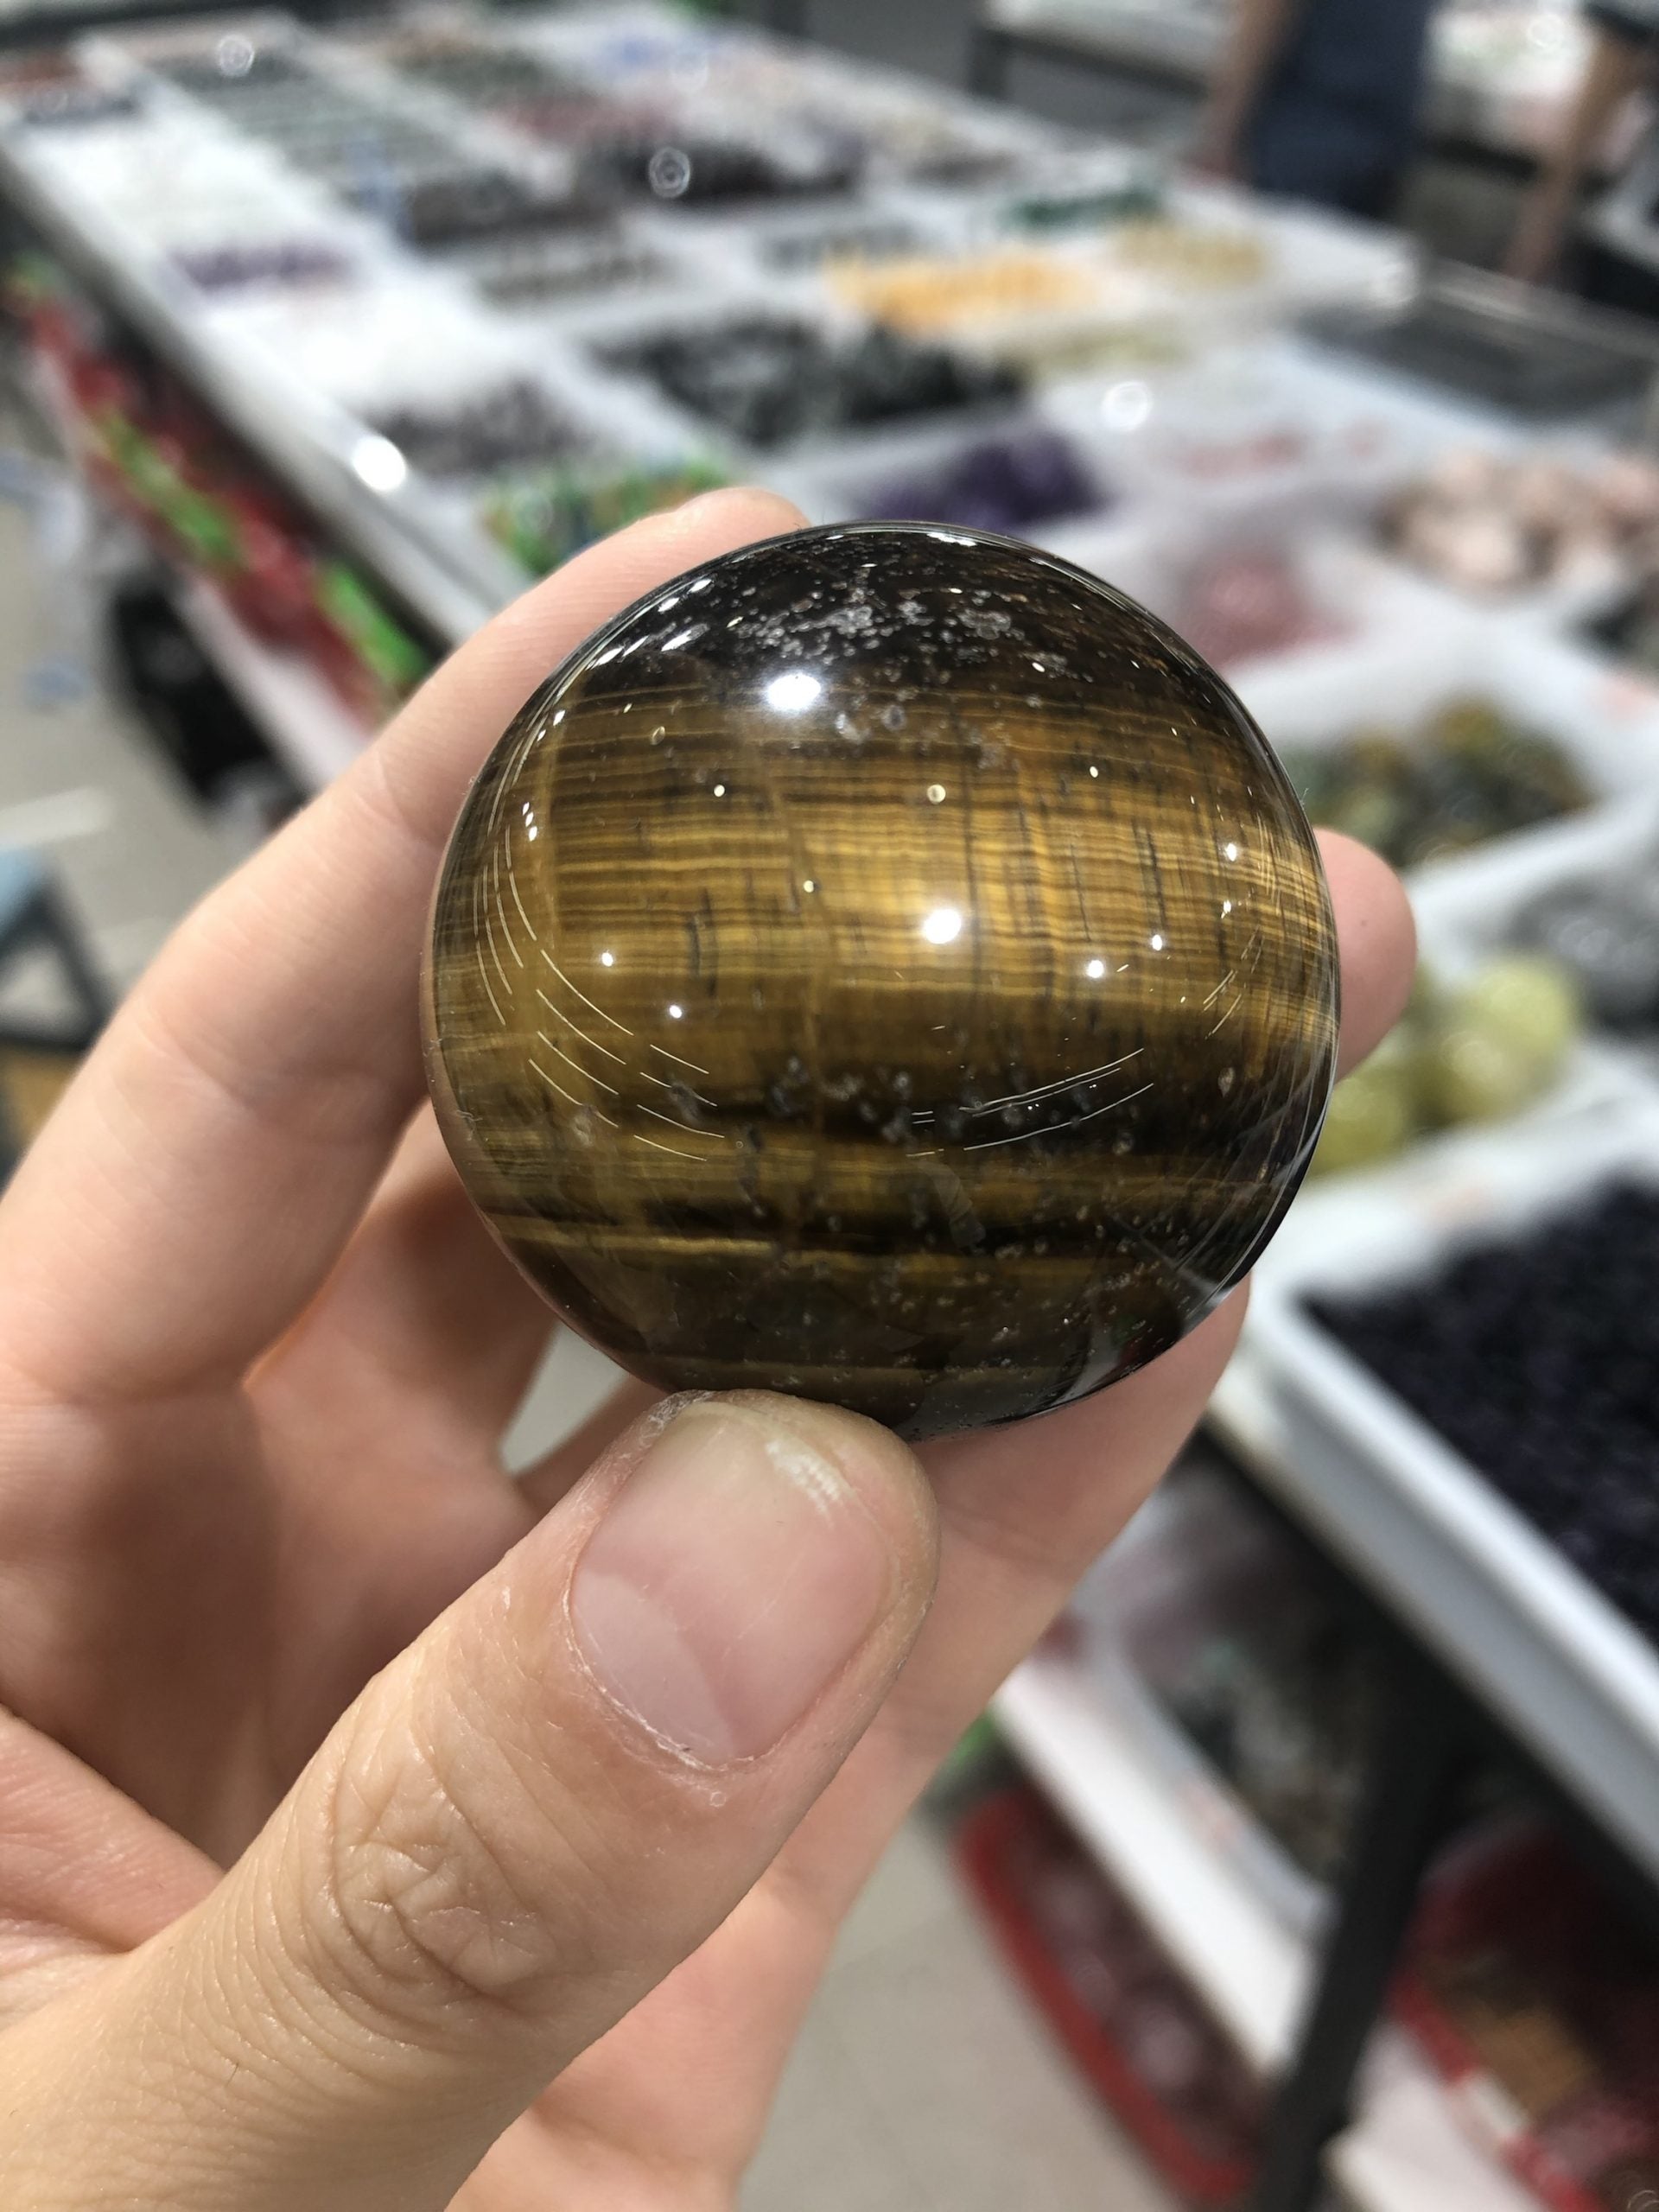 Tigereye sphere